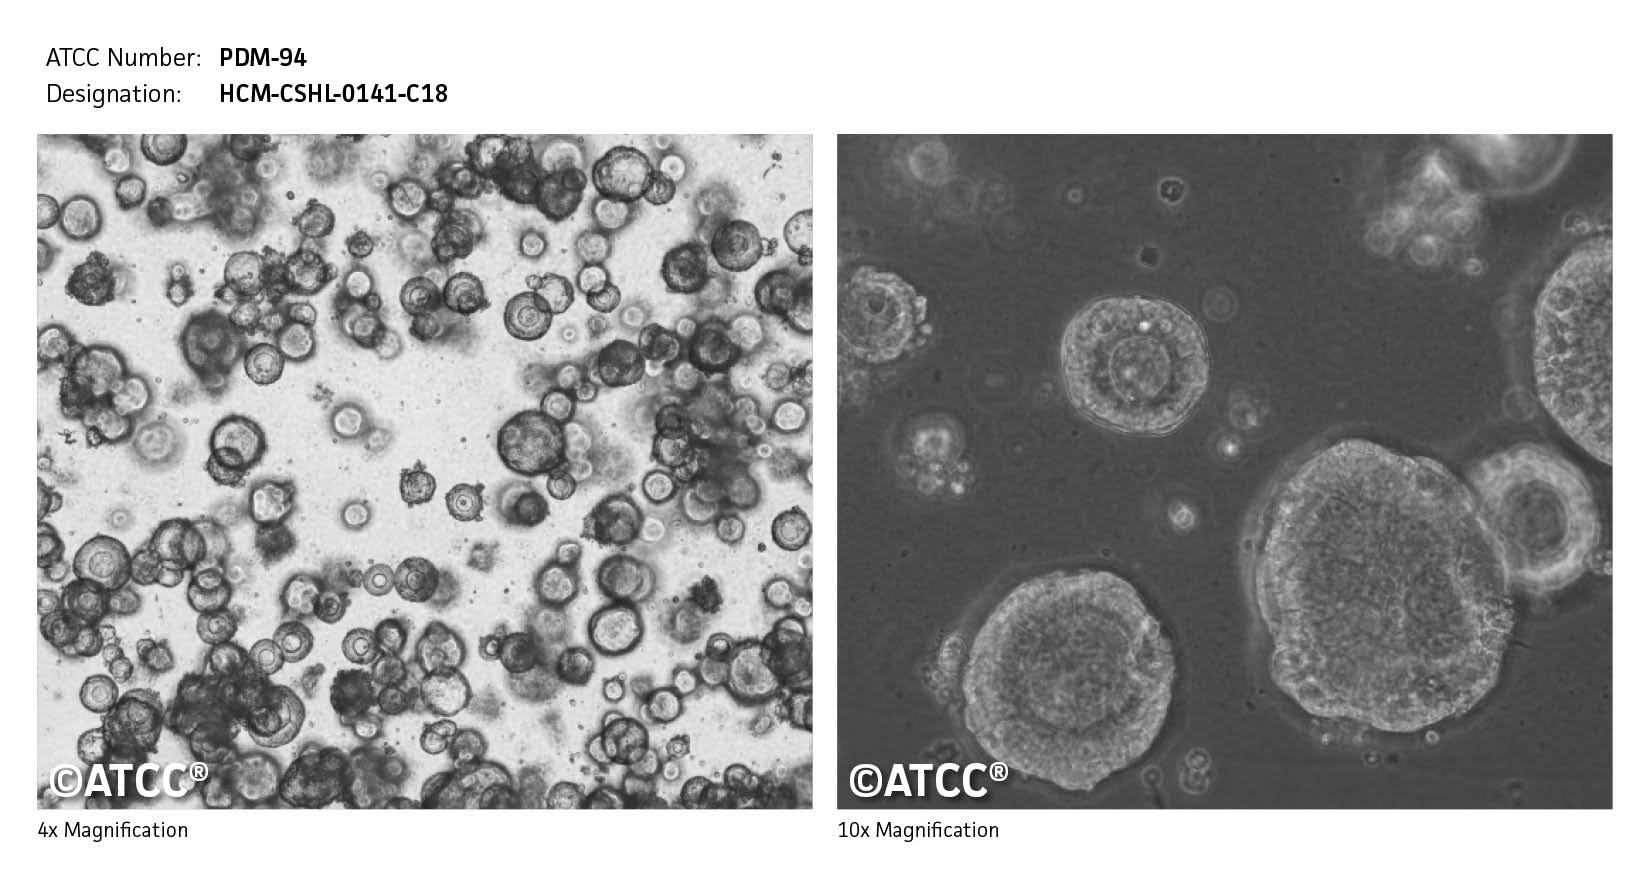 ATCC PDM-94 Cell Micrograph